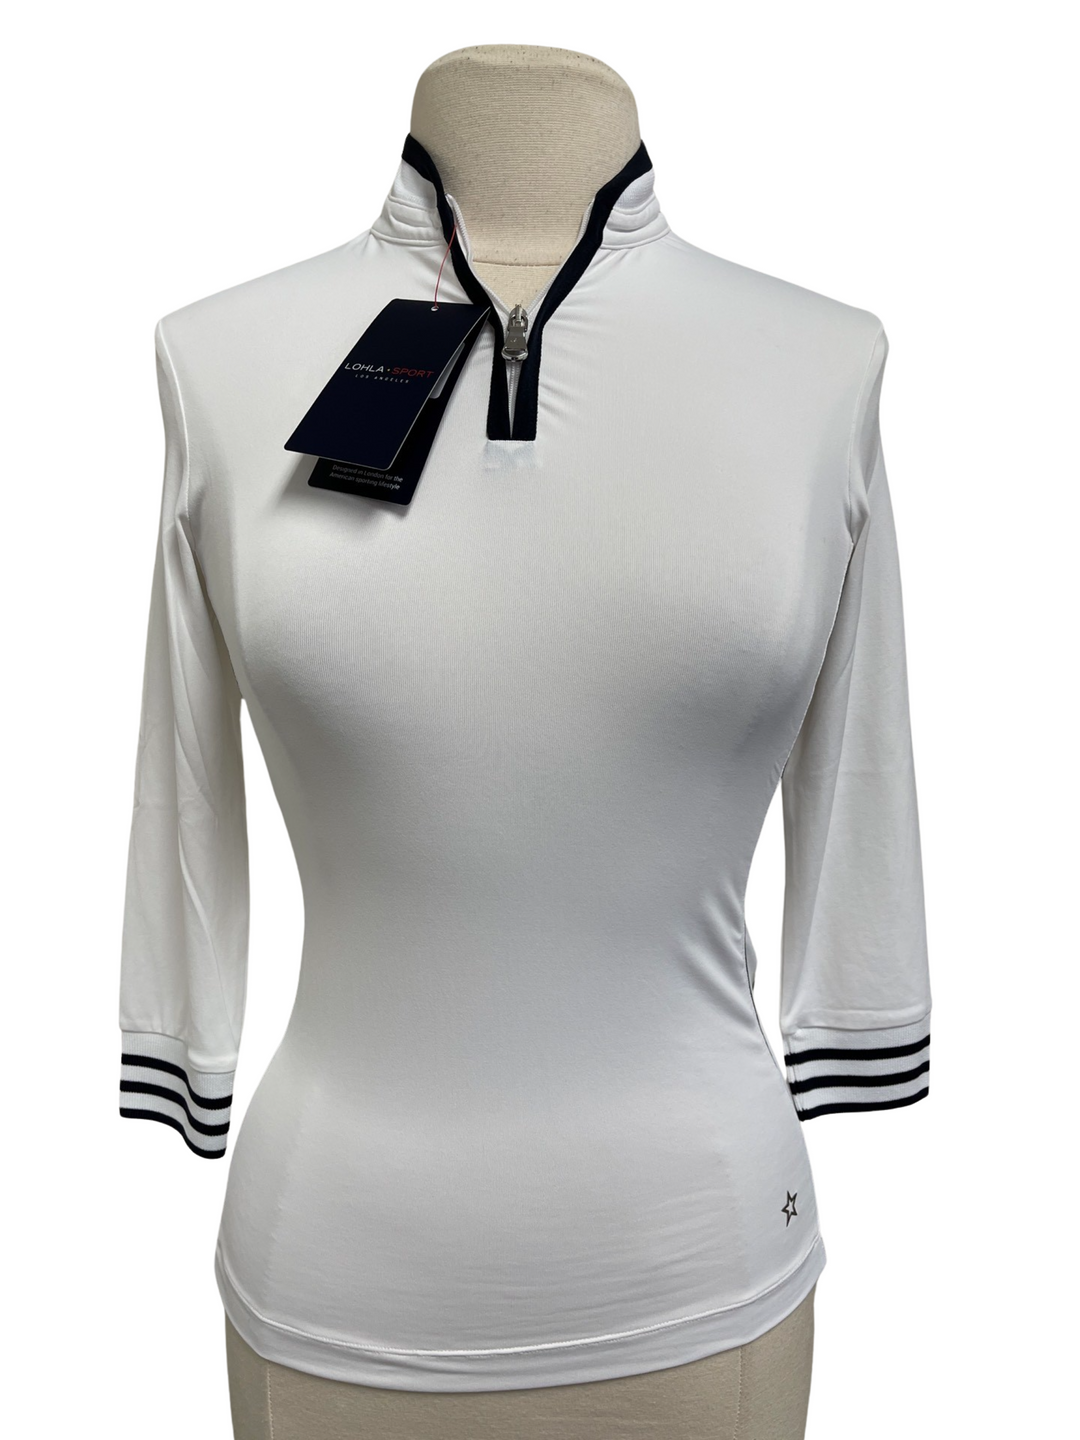 Lohla Sport - The Carolyn 3/4 Sleeve Top - White/Navy - Skorzie